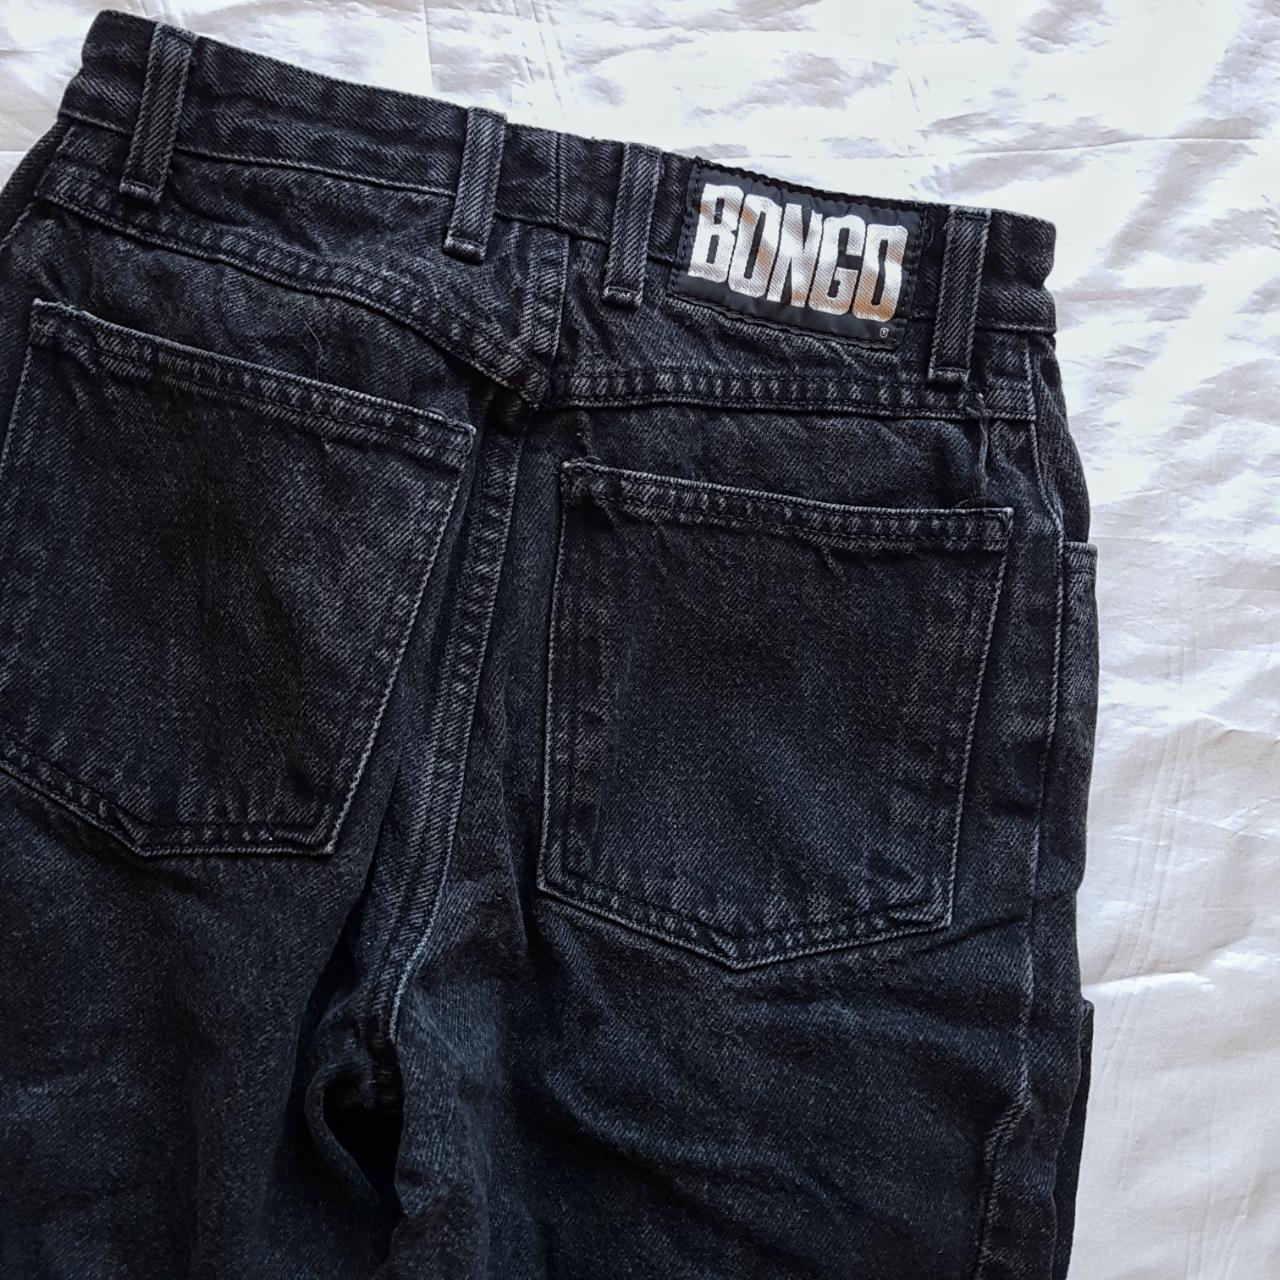 Product Image 3 - Vintage Bongo jeans in black